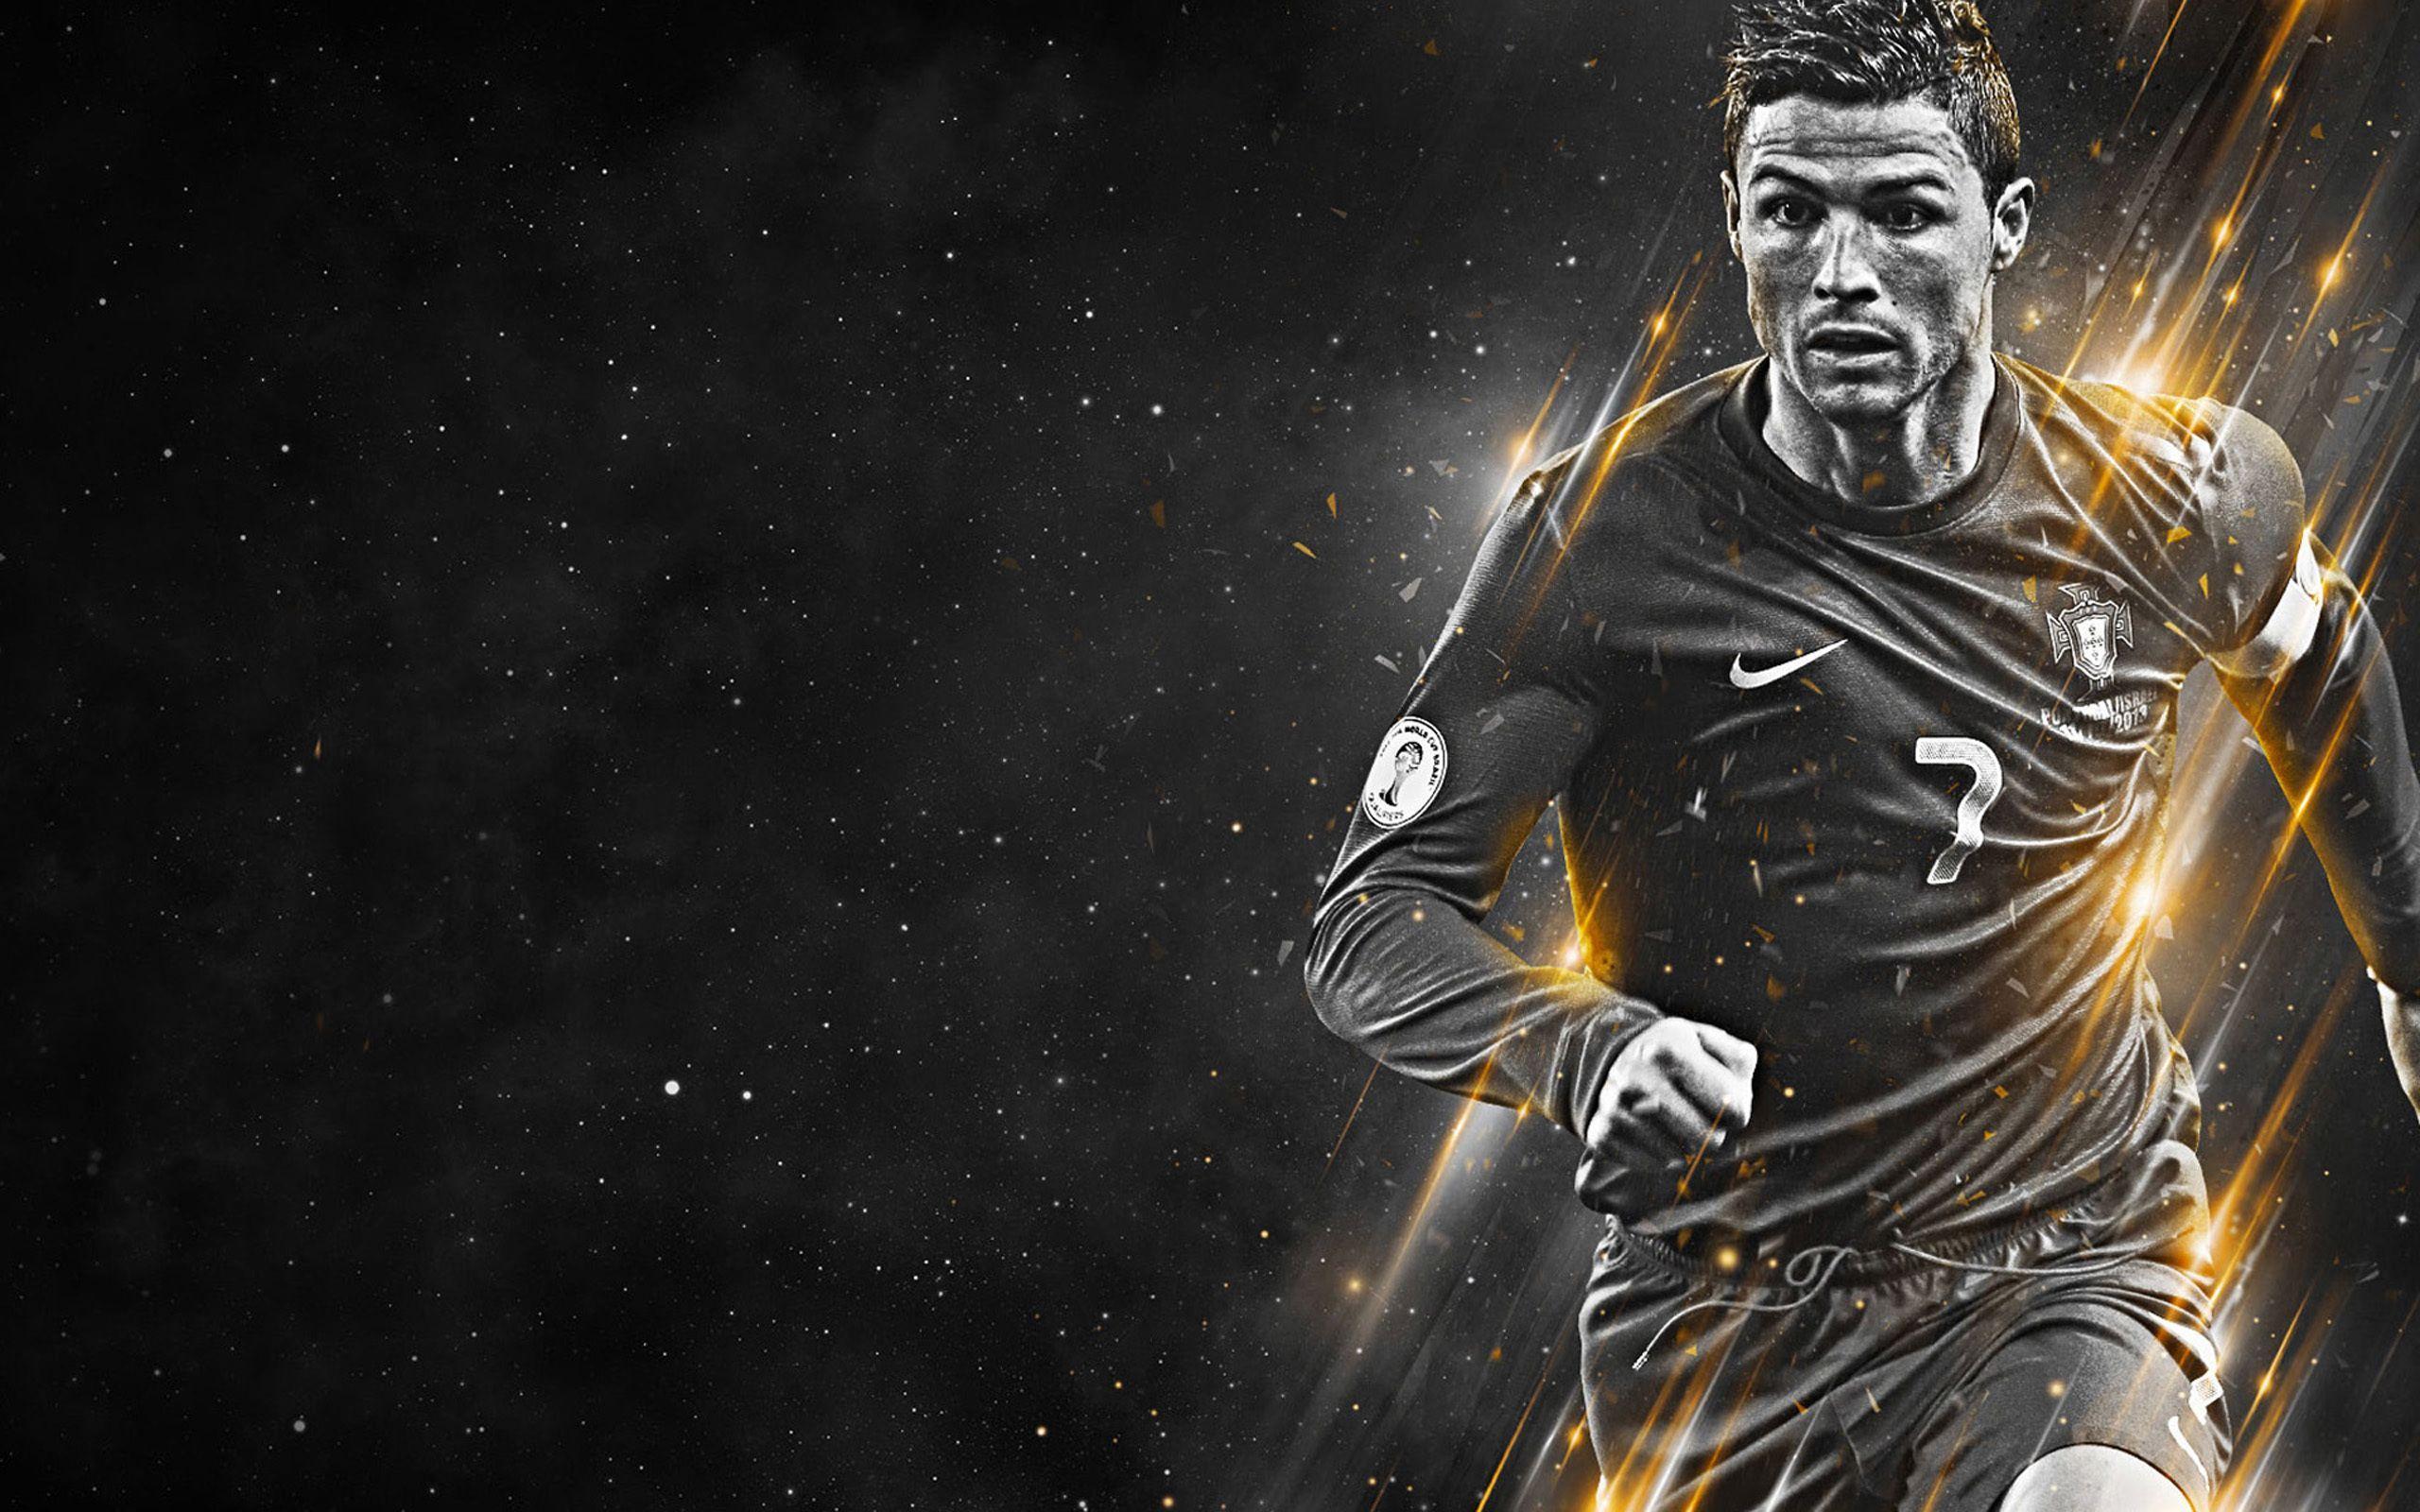 Ronaldo Football Wallpaper HD. Wallpaper, Background, Image